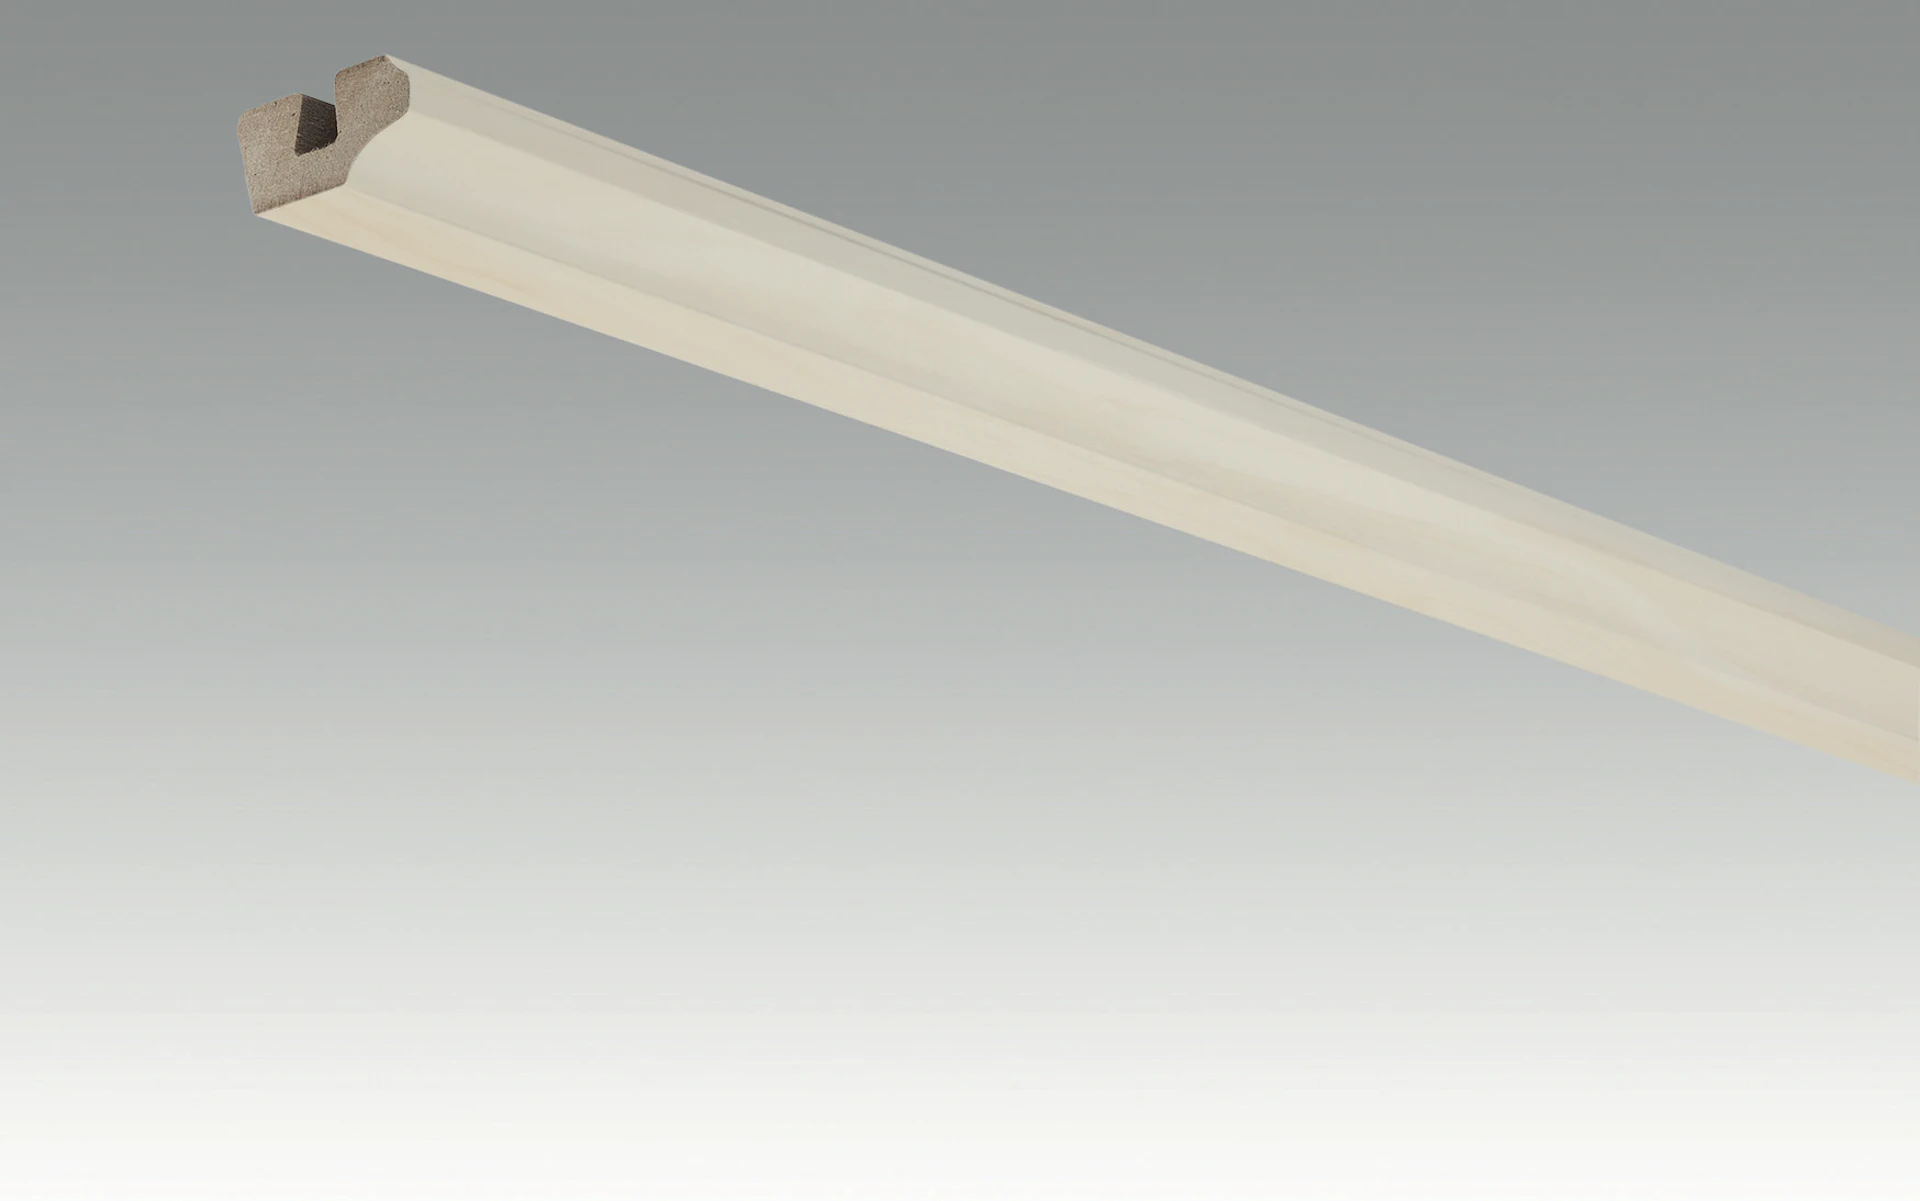 MEISTER Skirtings Ceiling trims Lightwood 4096 - 2380 x 38 x 19 mm (200031-2380-04096)